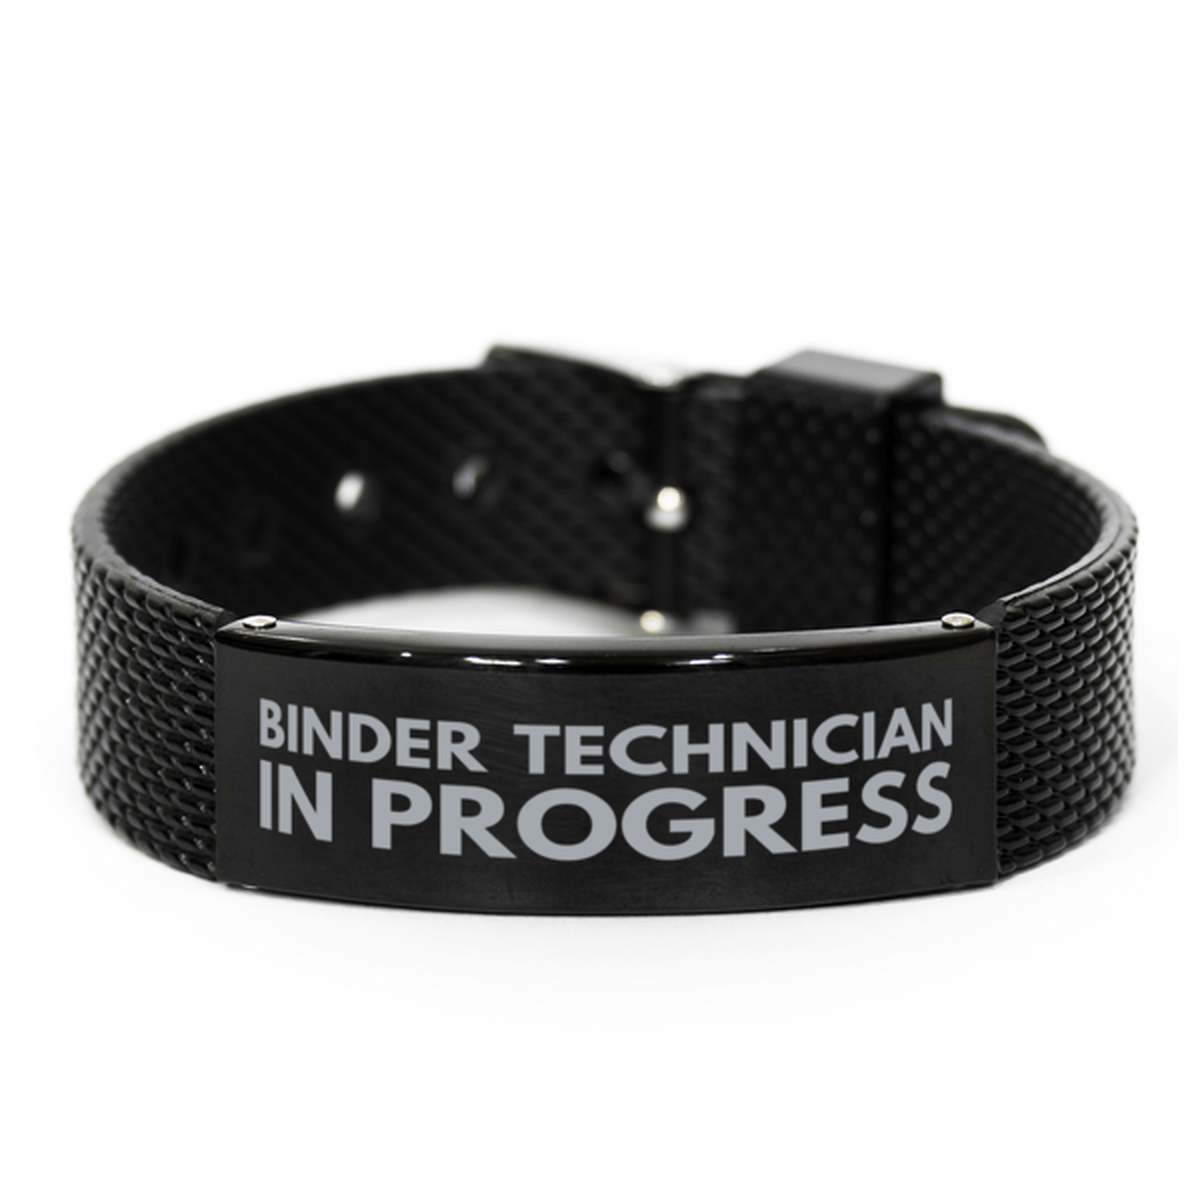 Inspirational Binder Technician Black Shark Mesh Bracelet, Binder Technician In Progress, Best Graduation Gifts for Students